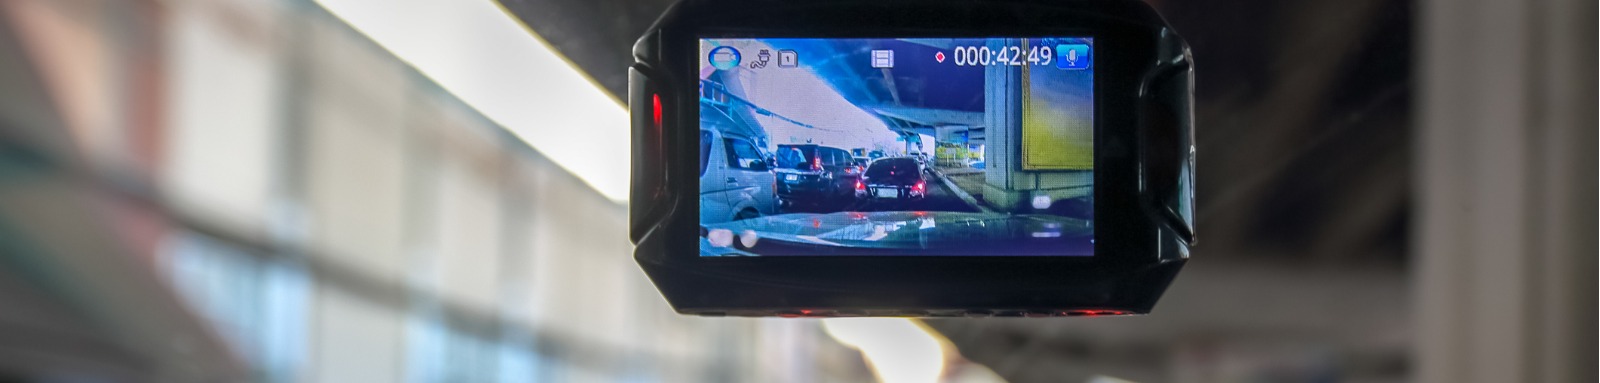 Dash camera on car windscreen